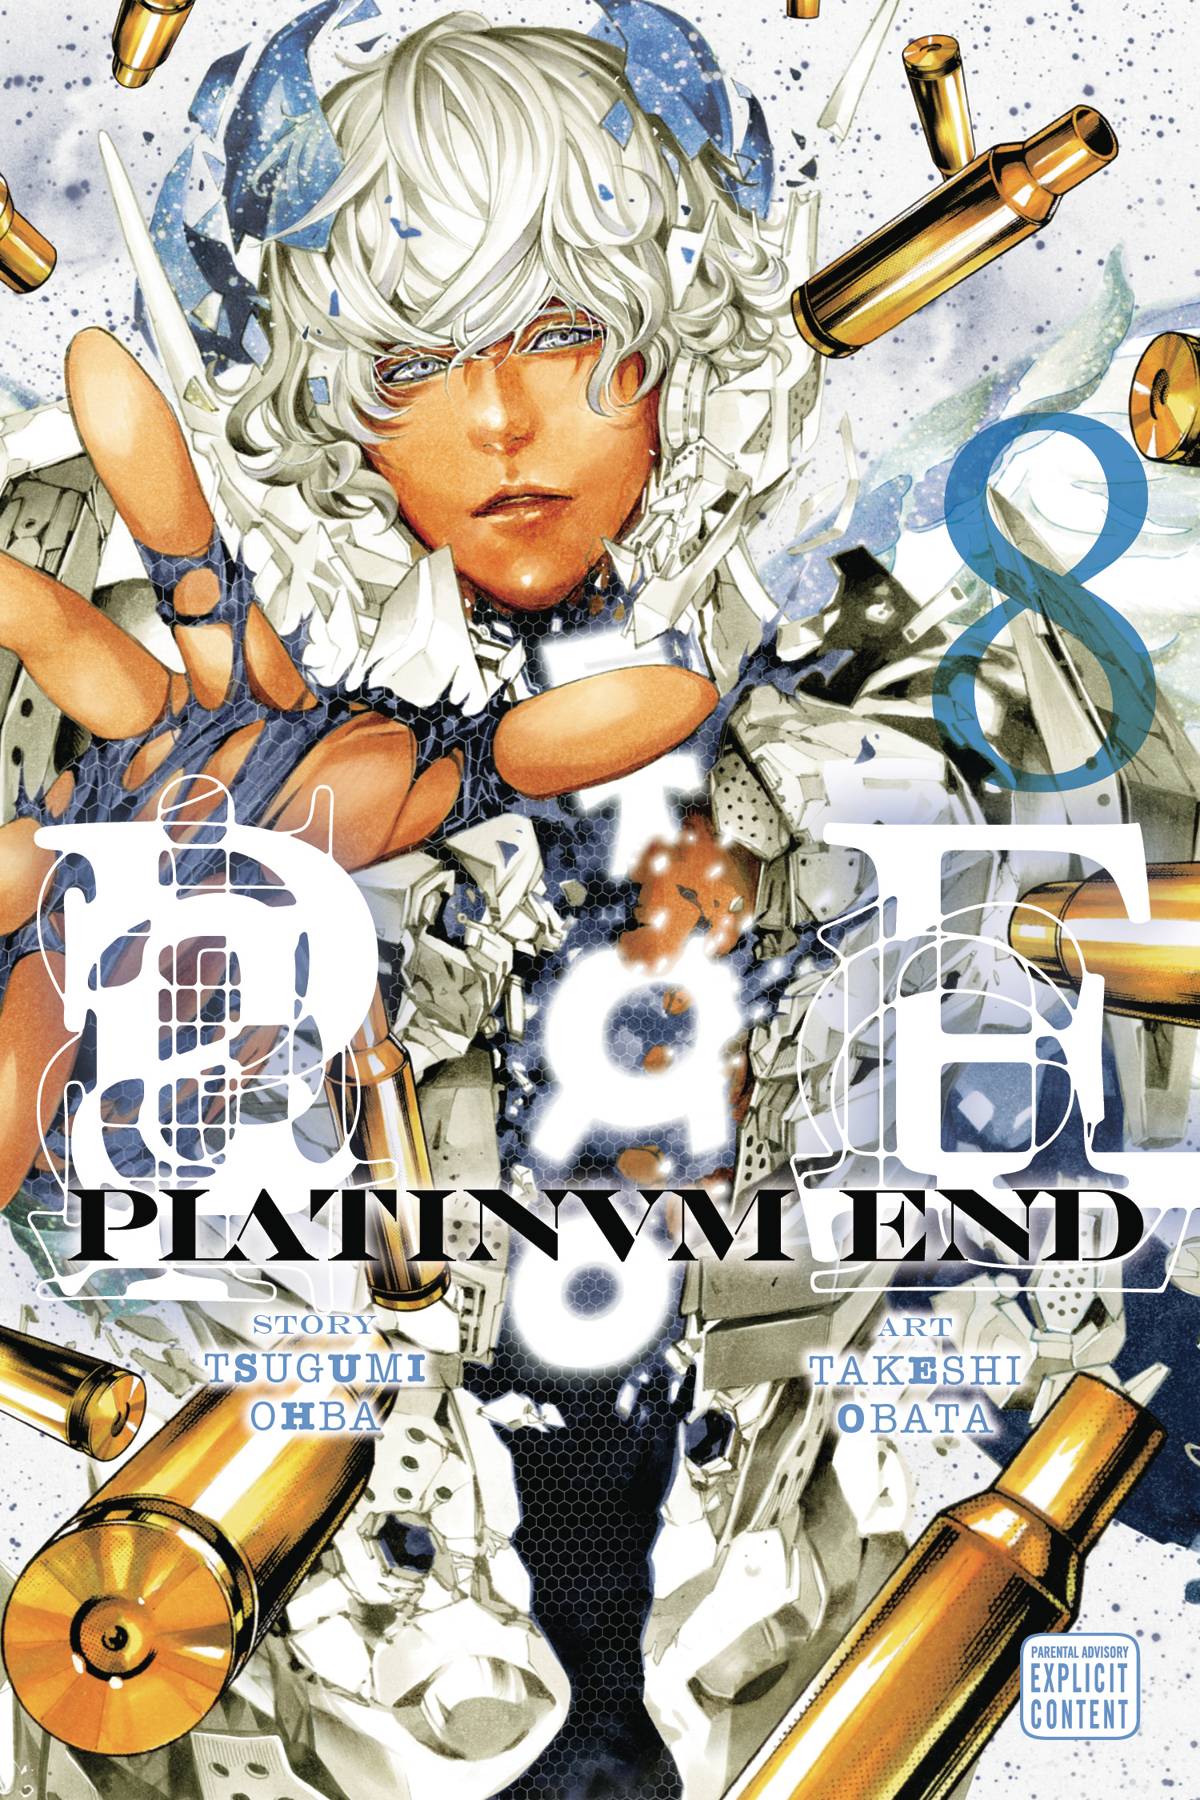 Platinum End Manga Volume 8 (Mature)